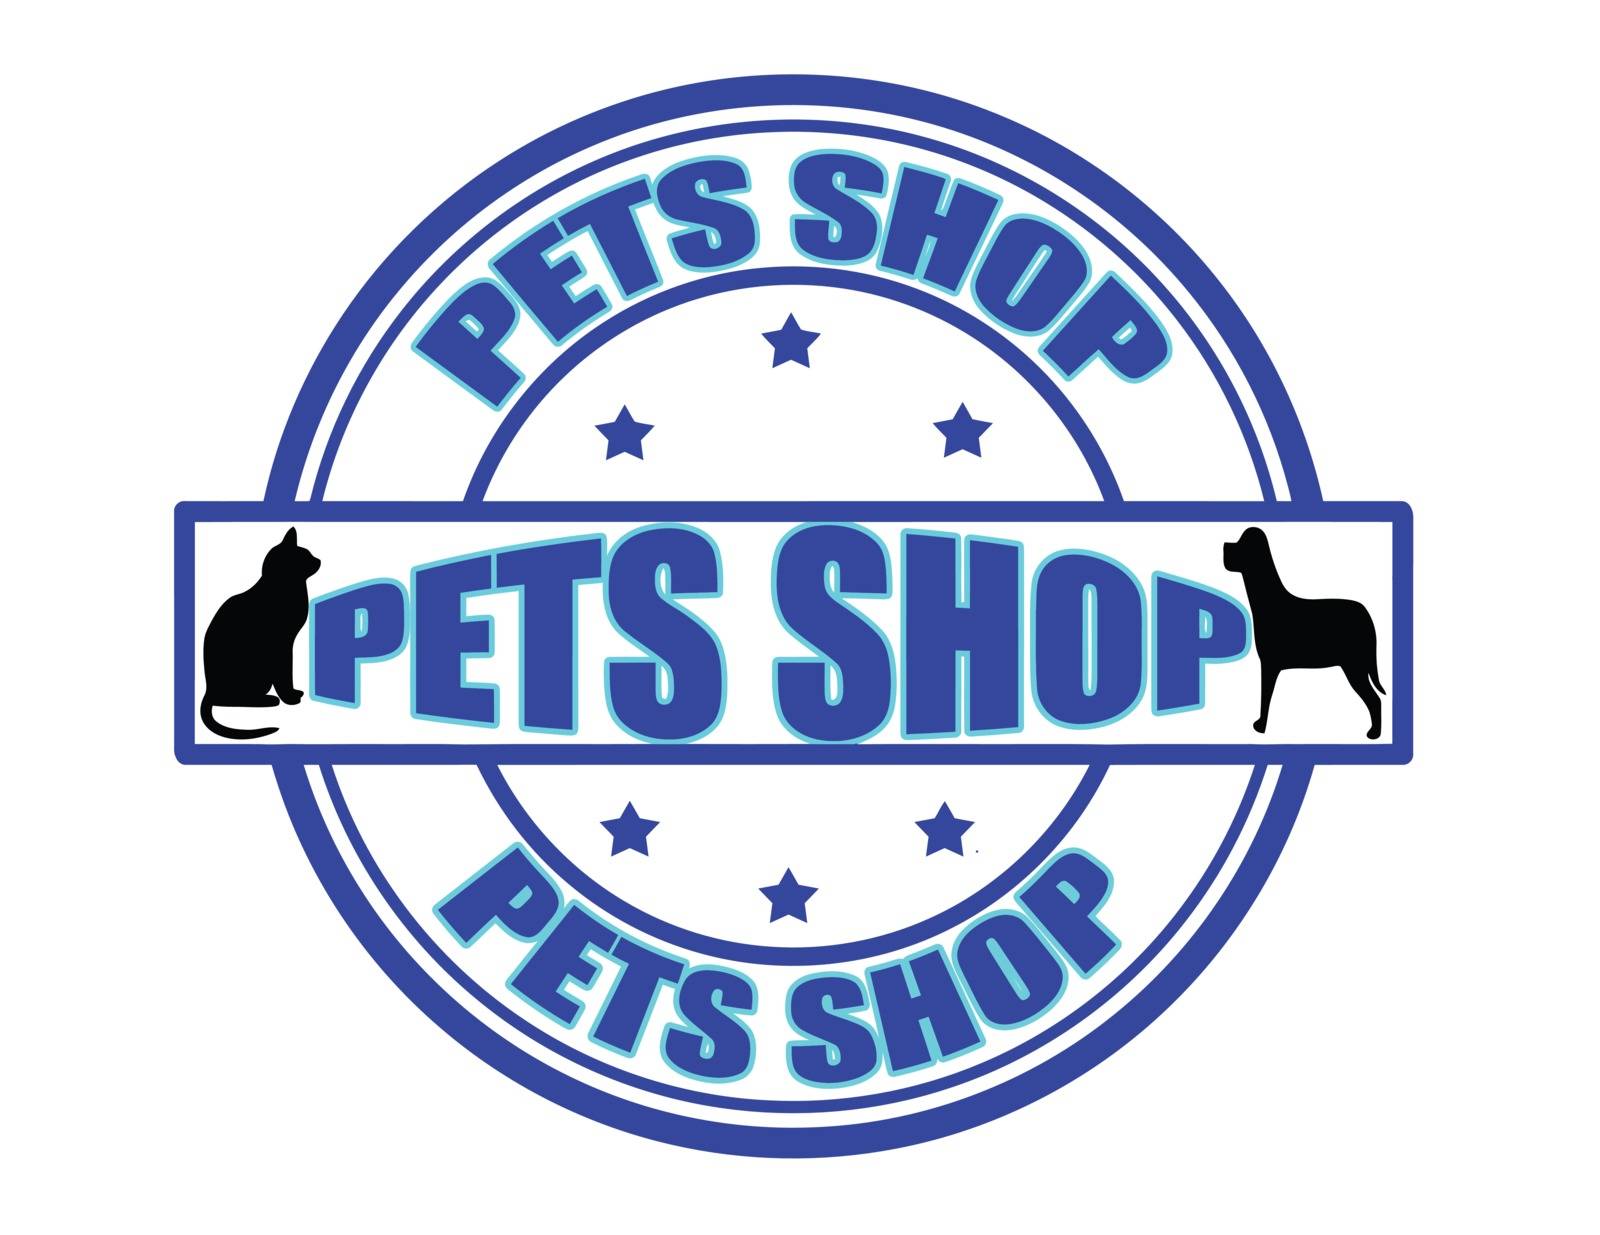 Pets shop by carmenbobo